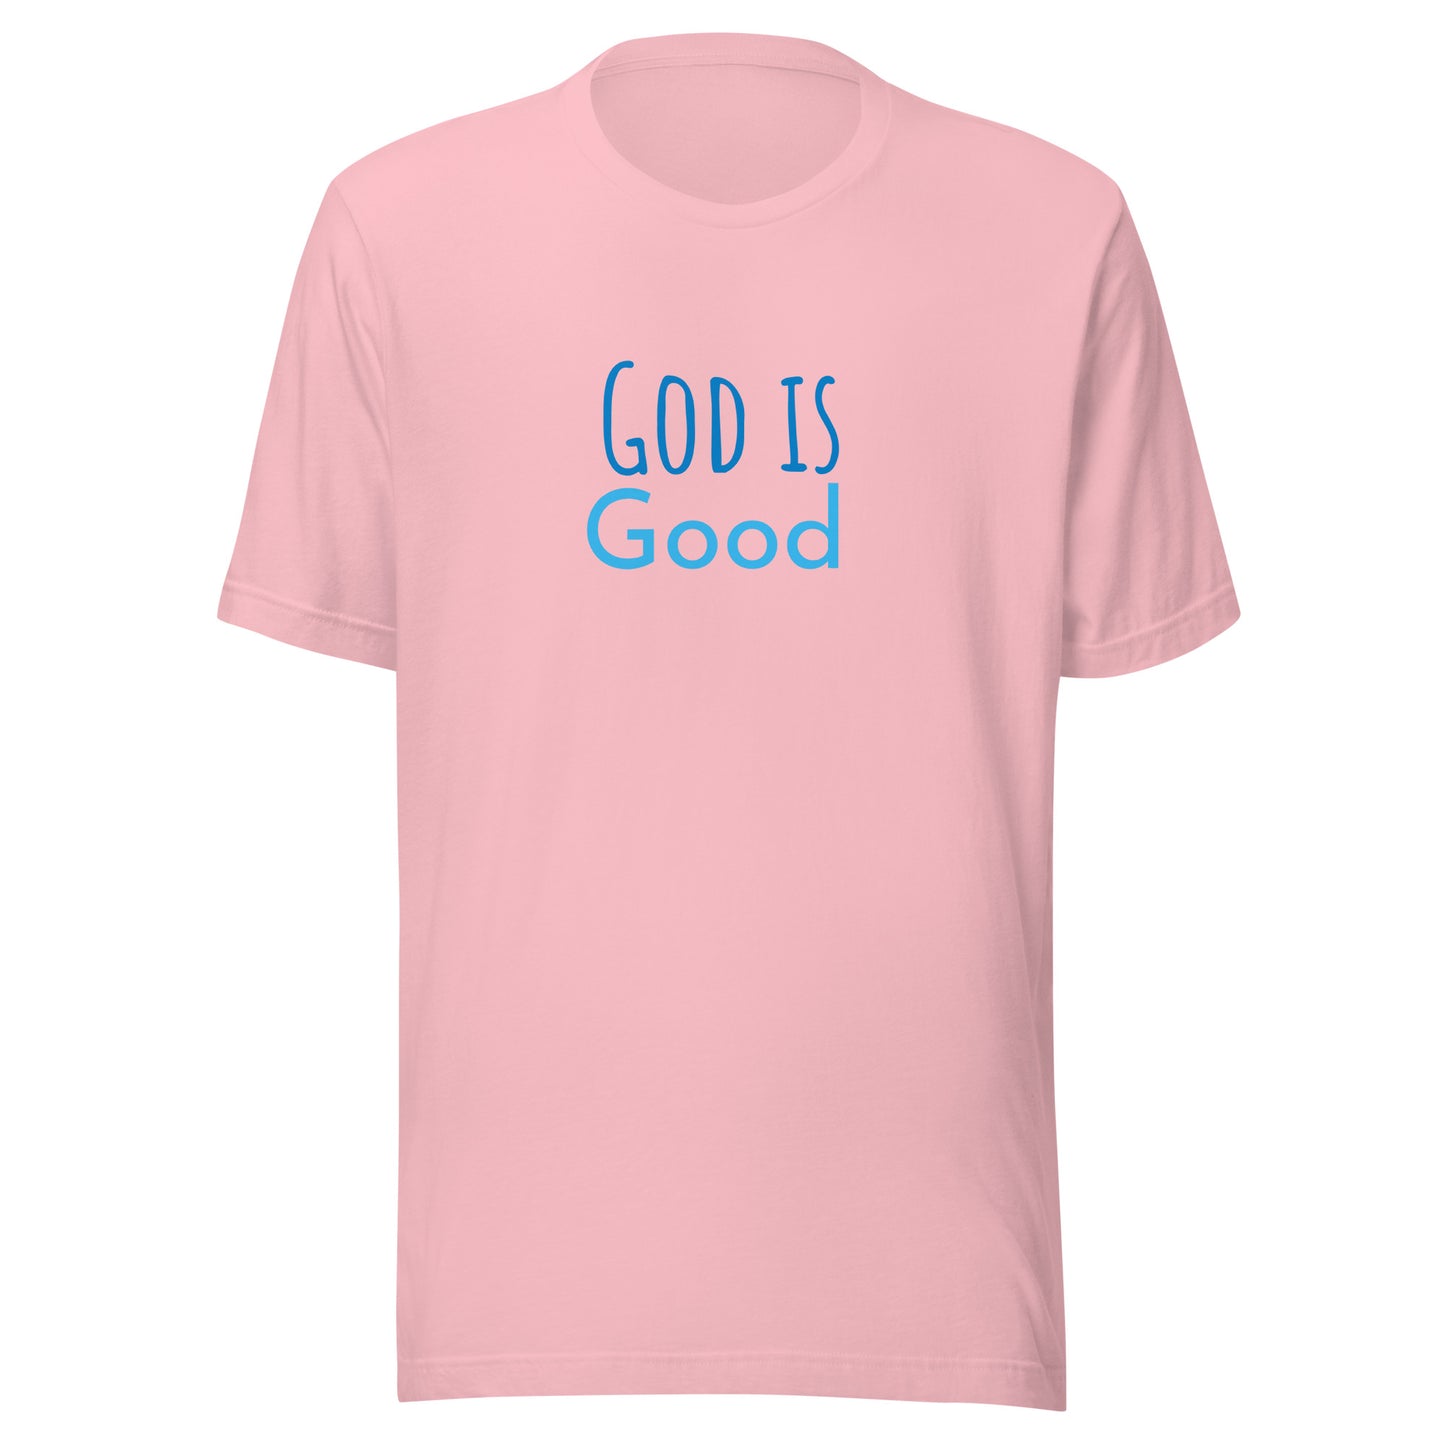 God is Good T-shirt